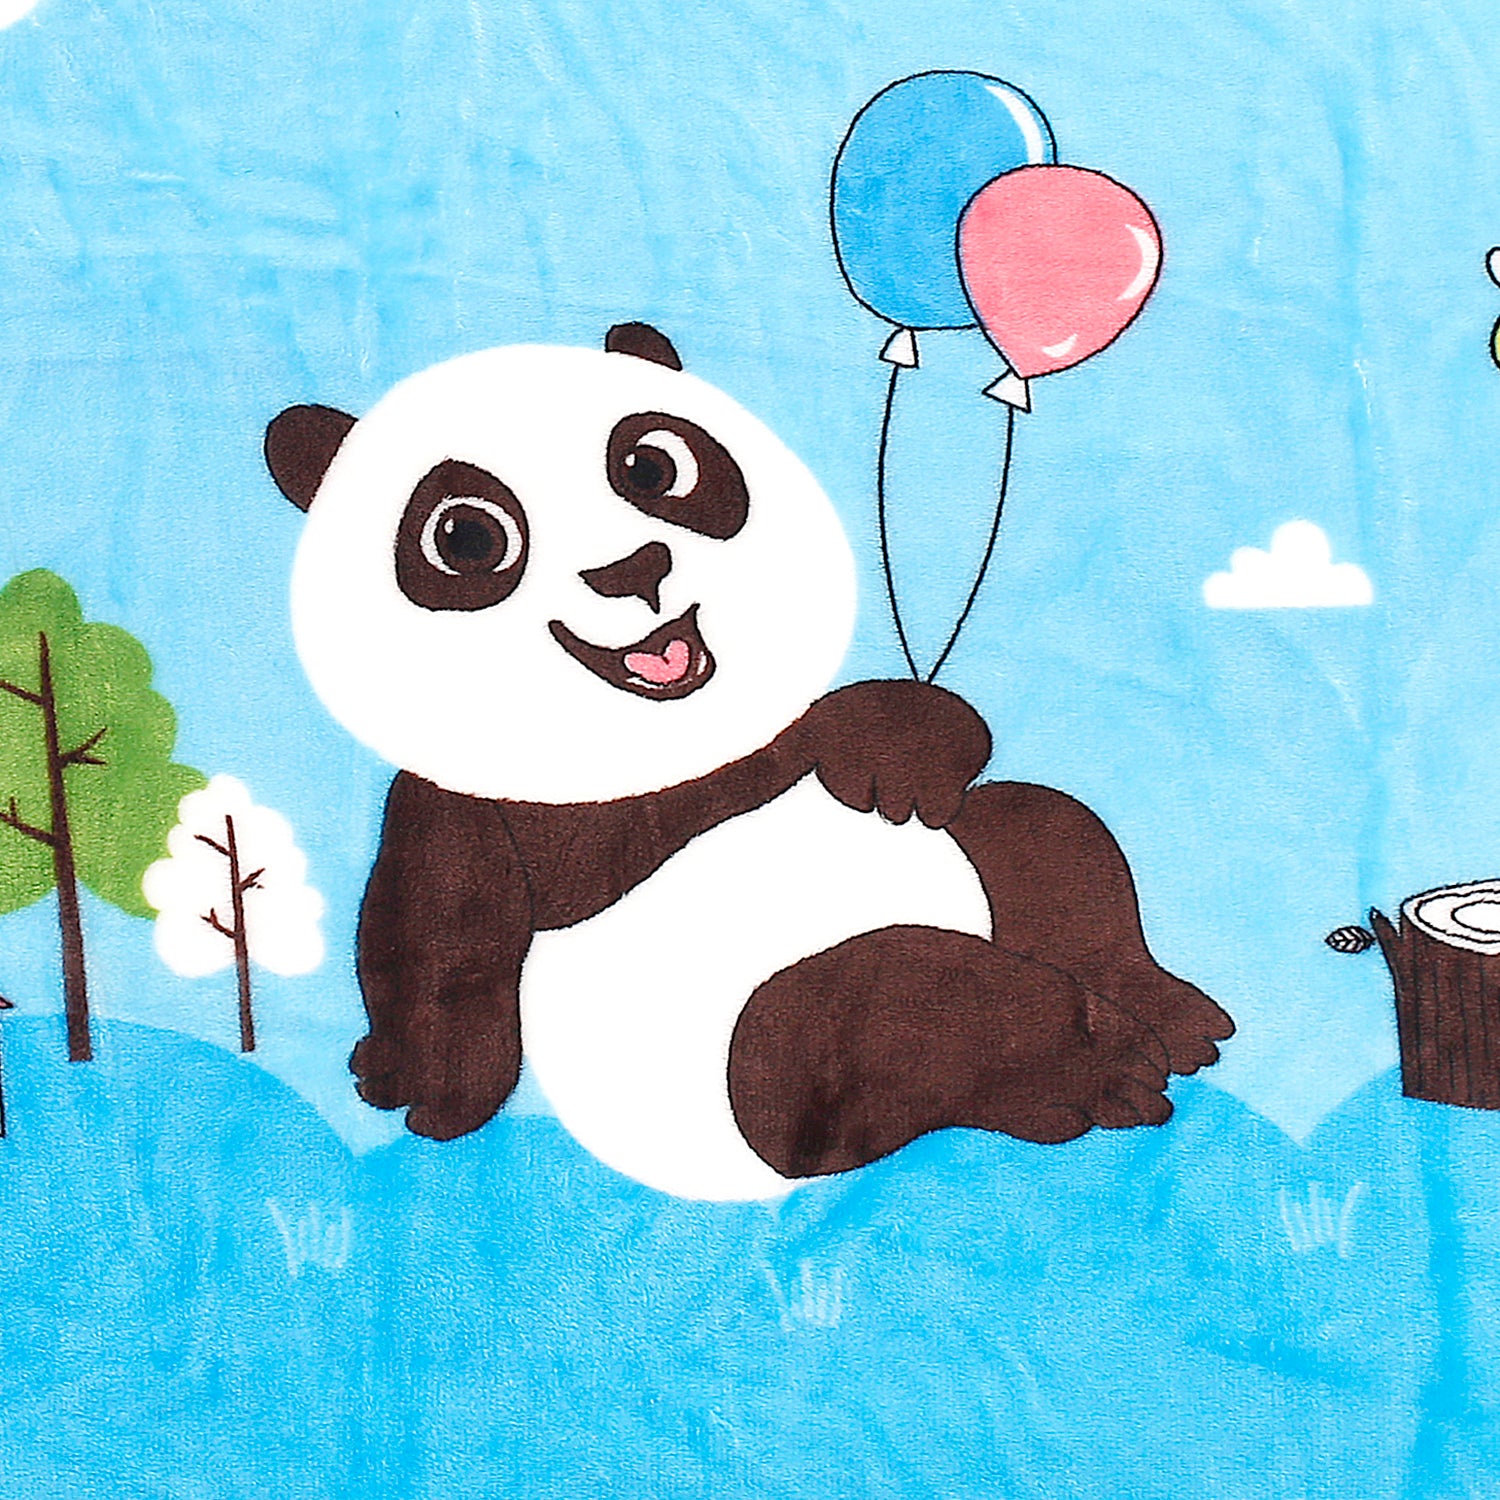 Balloon Panda Blue Blanket - Baby Moo